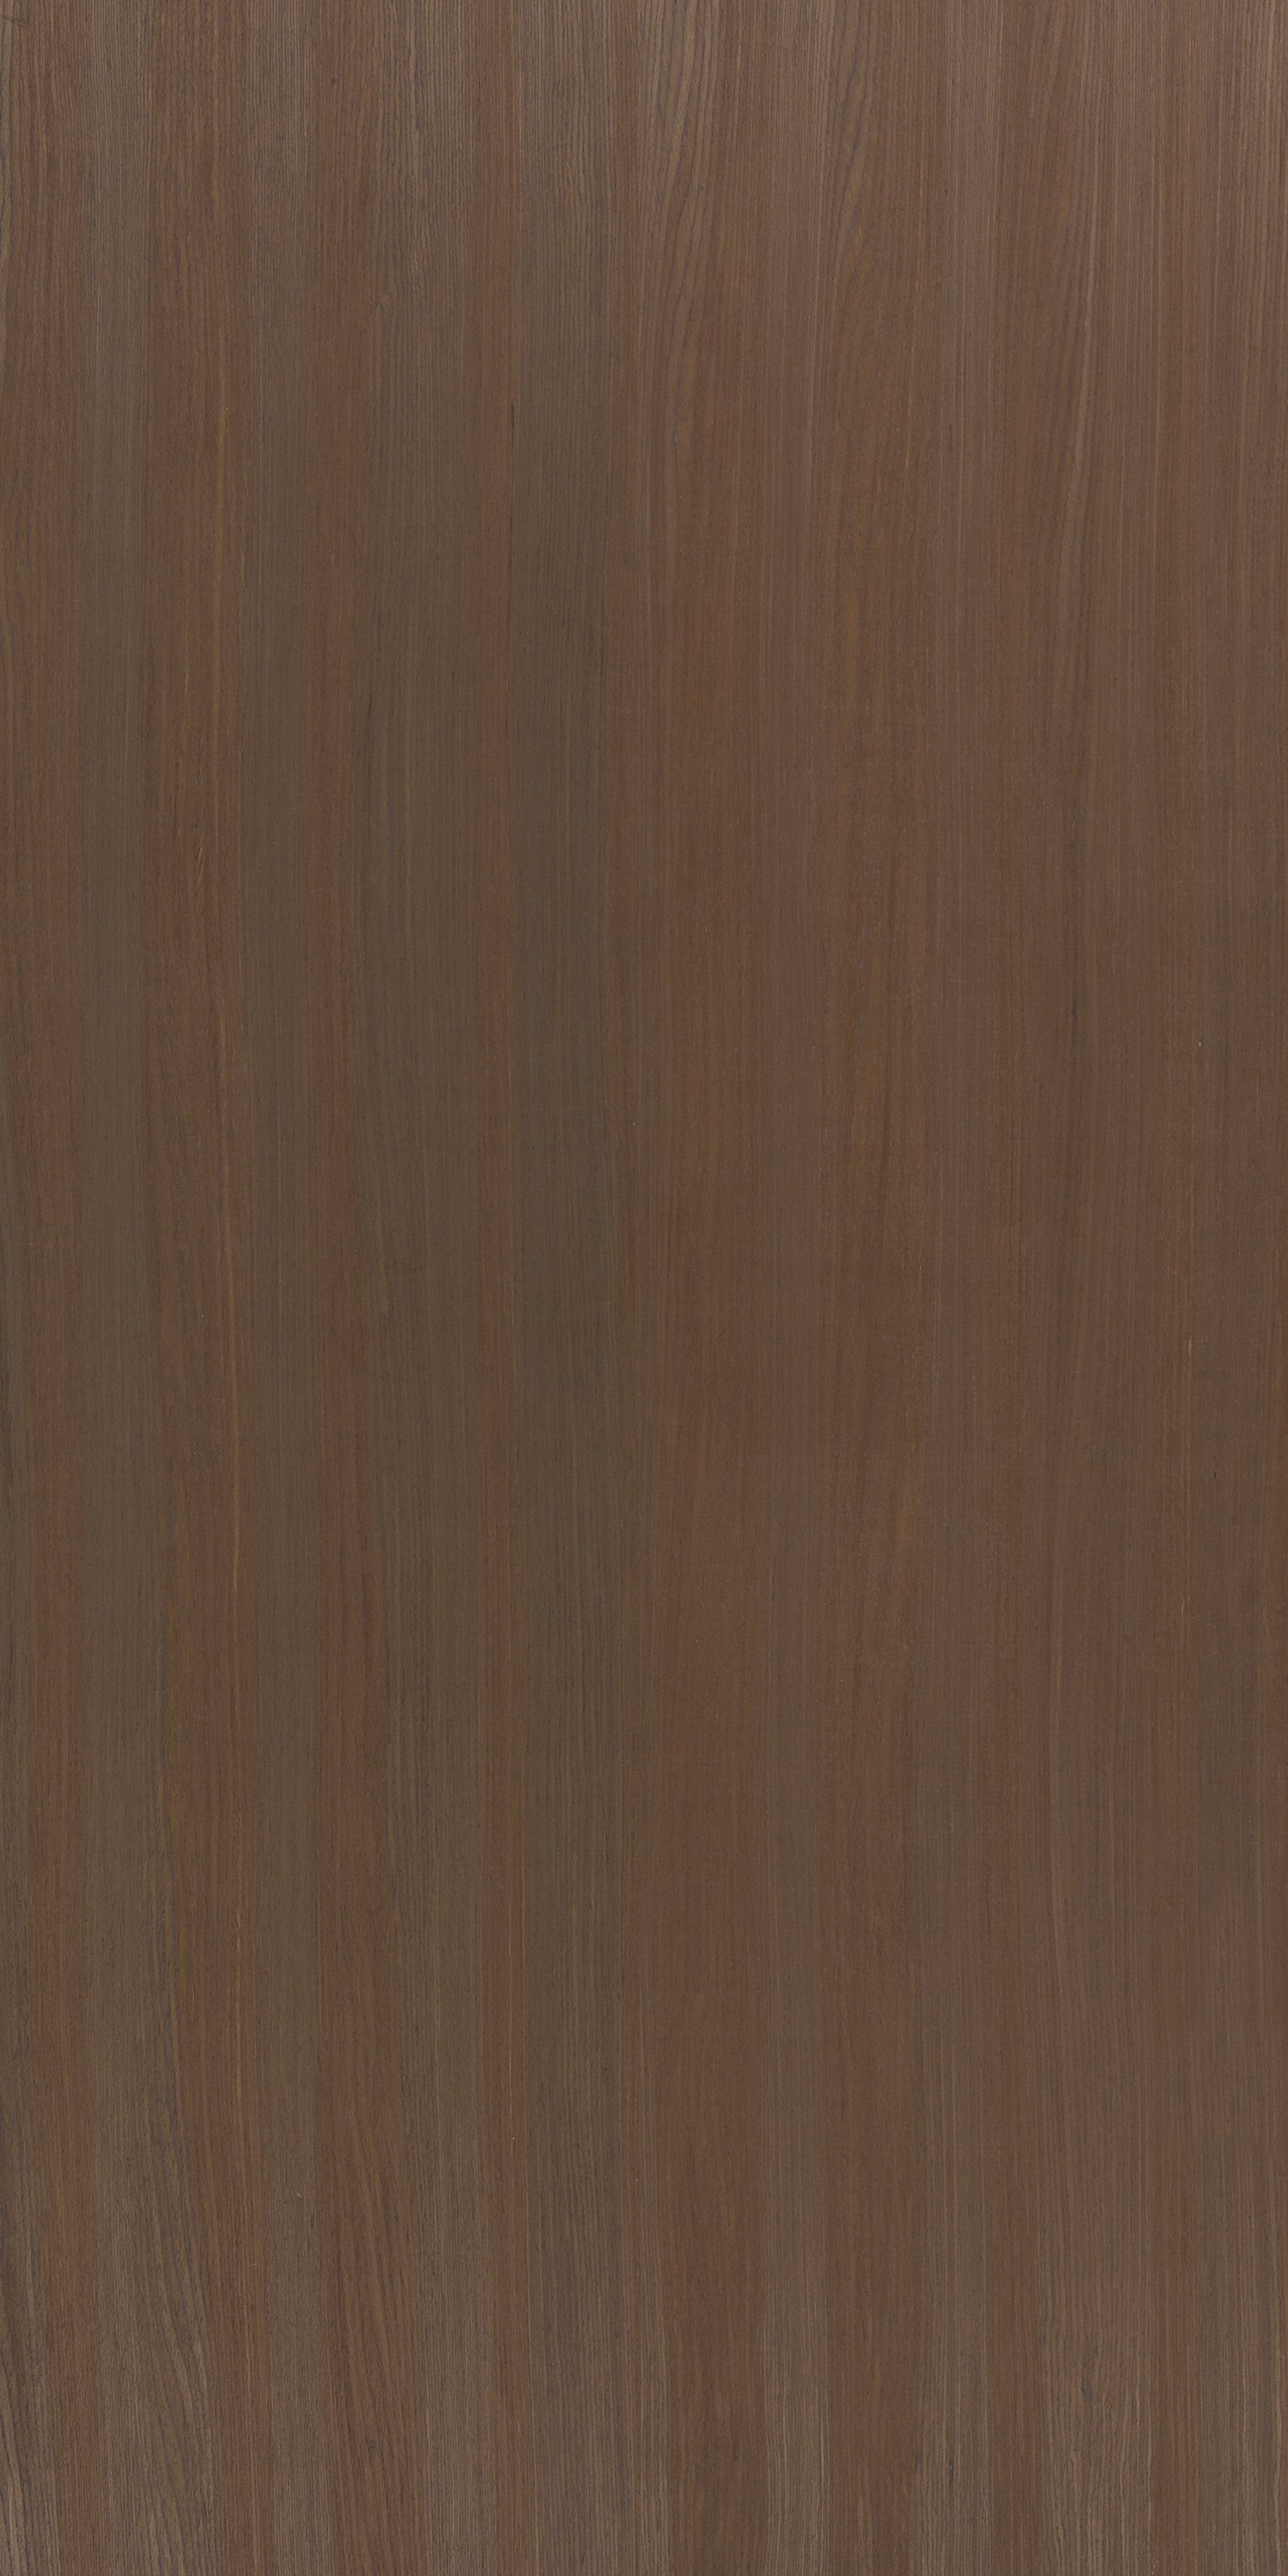 Buy Greenply Wood Crrests 4mm Veneer Asian Ash Online in India